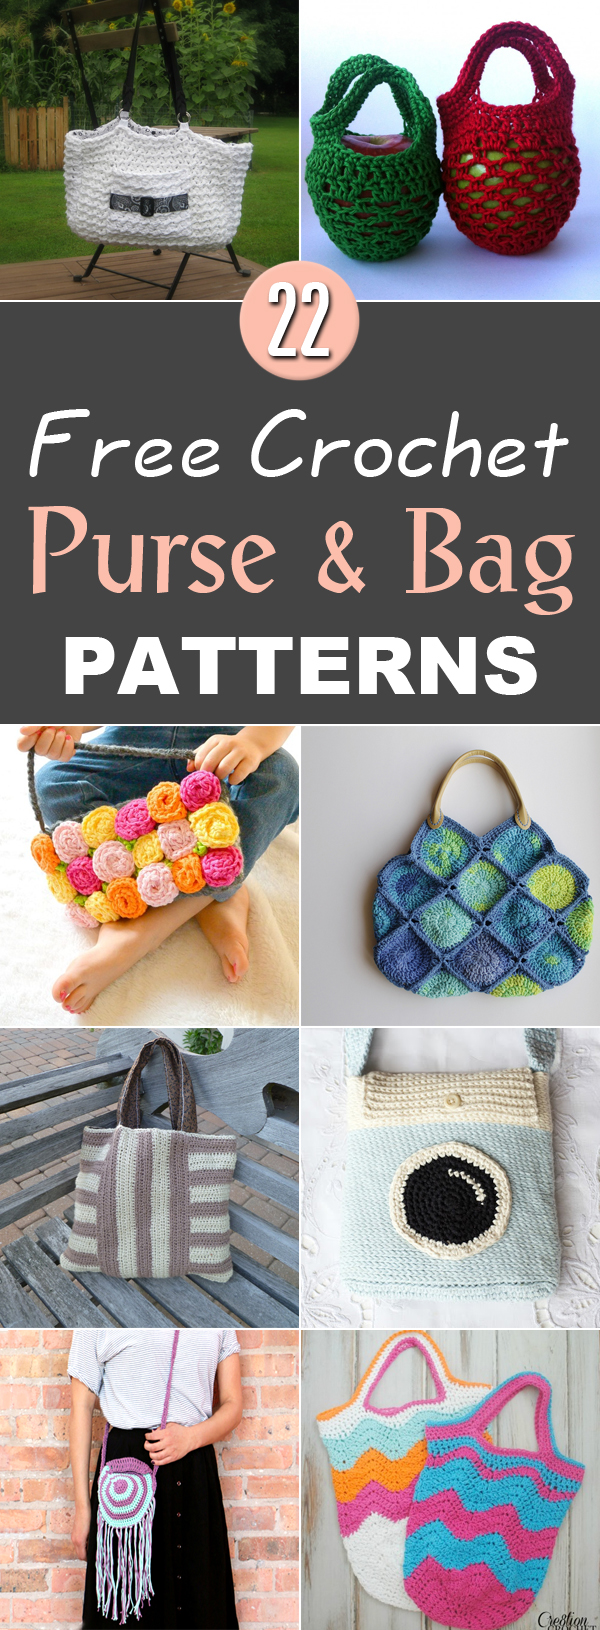 22 Free Crochet Purse & Bag Patterns